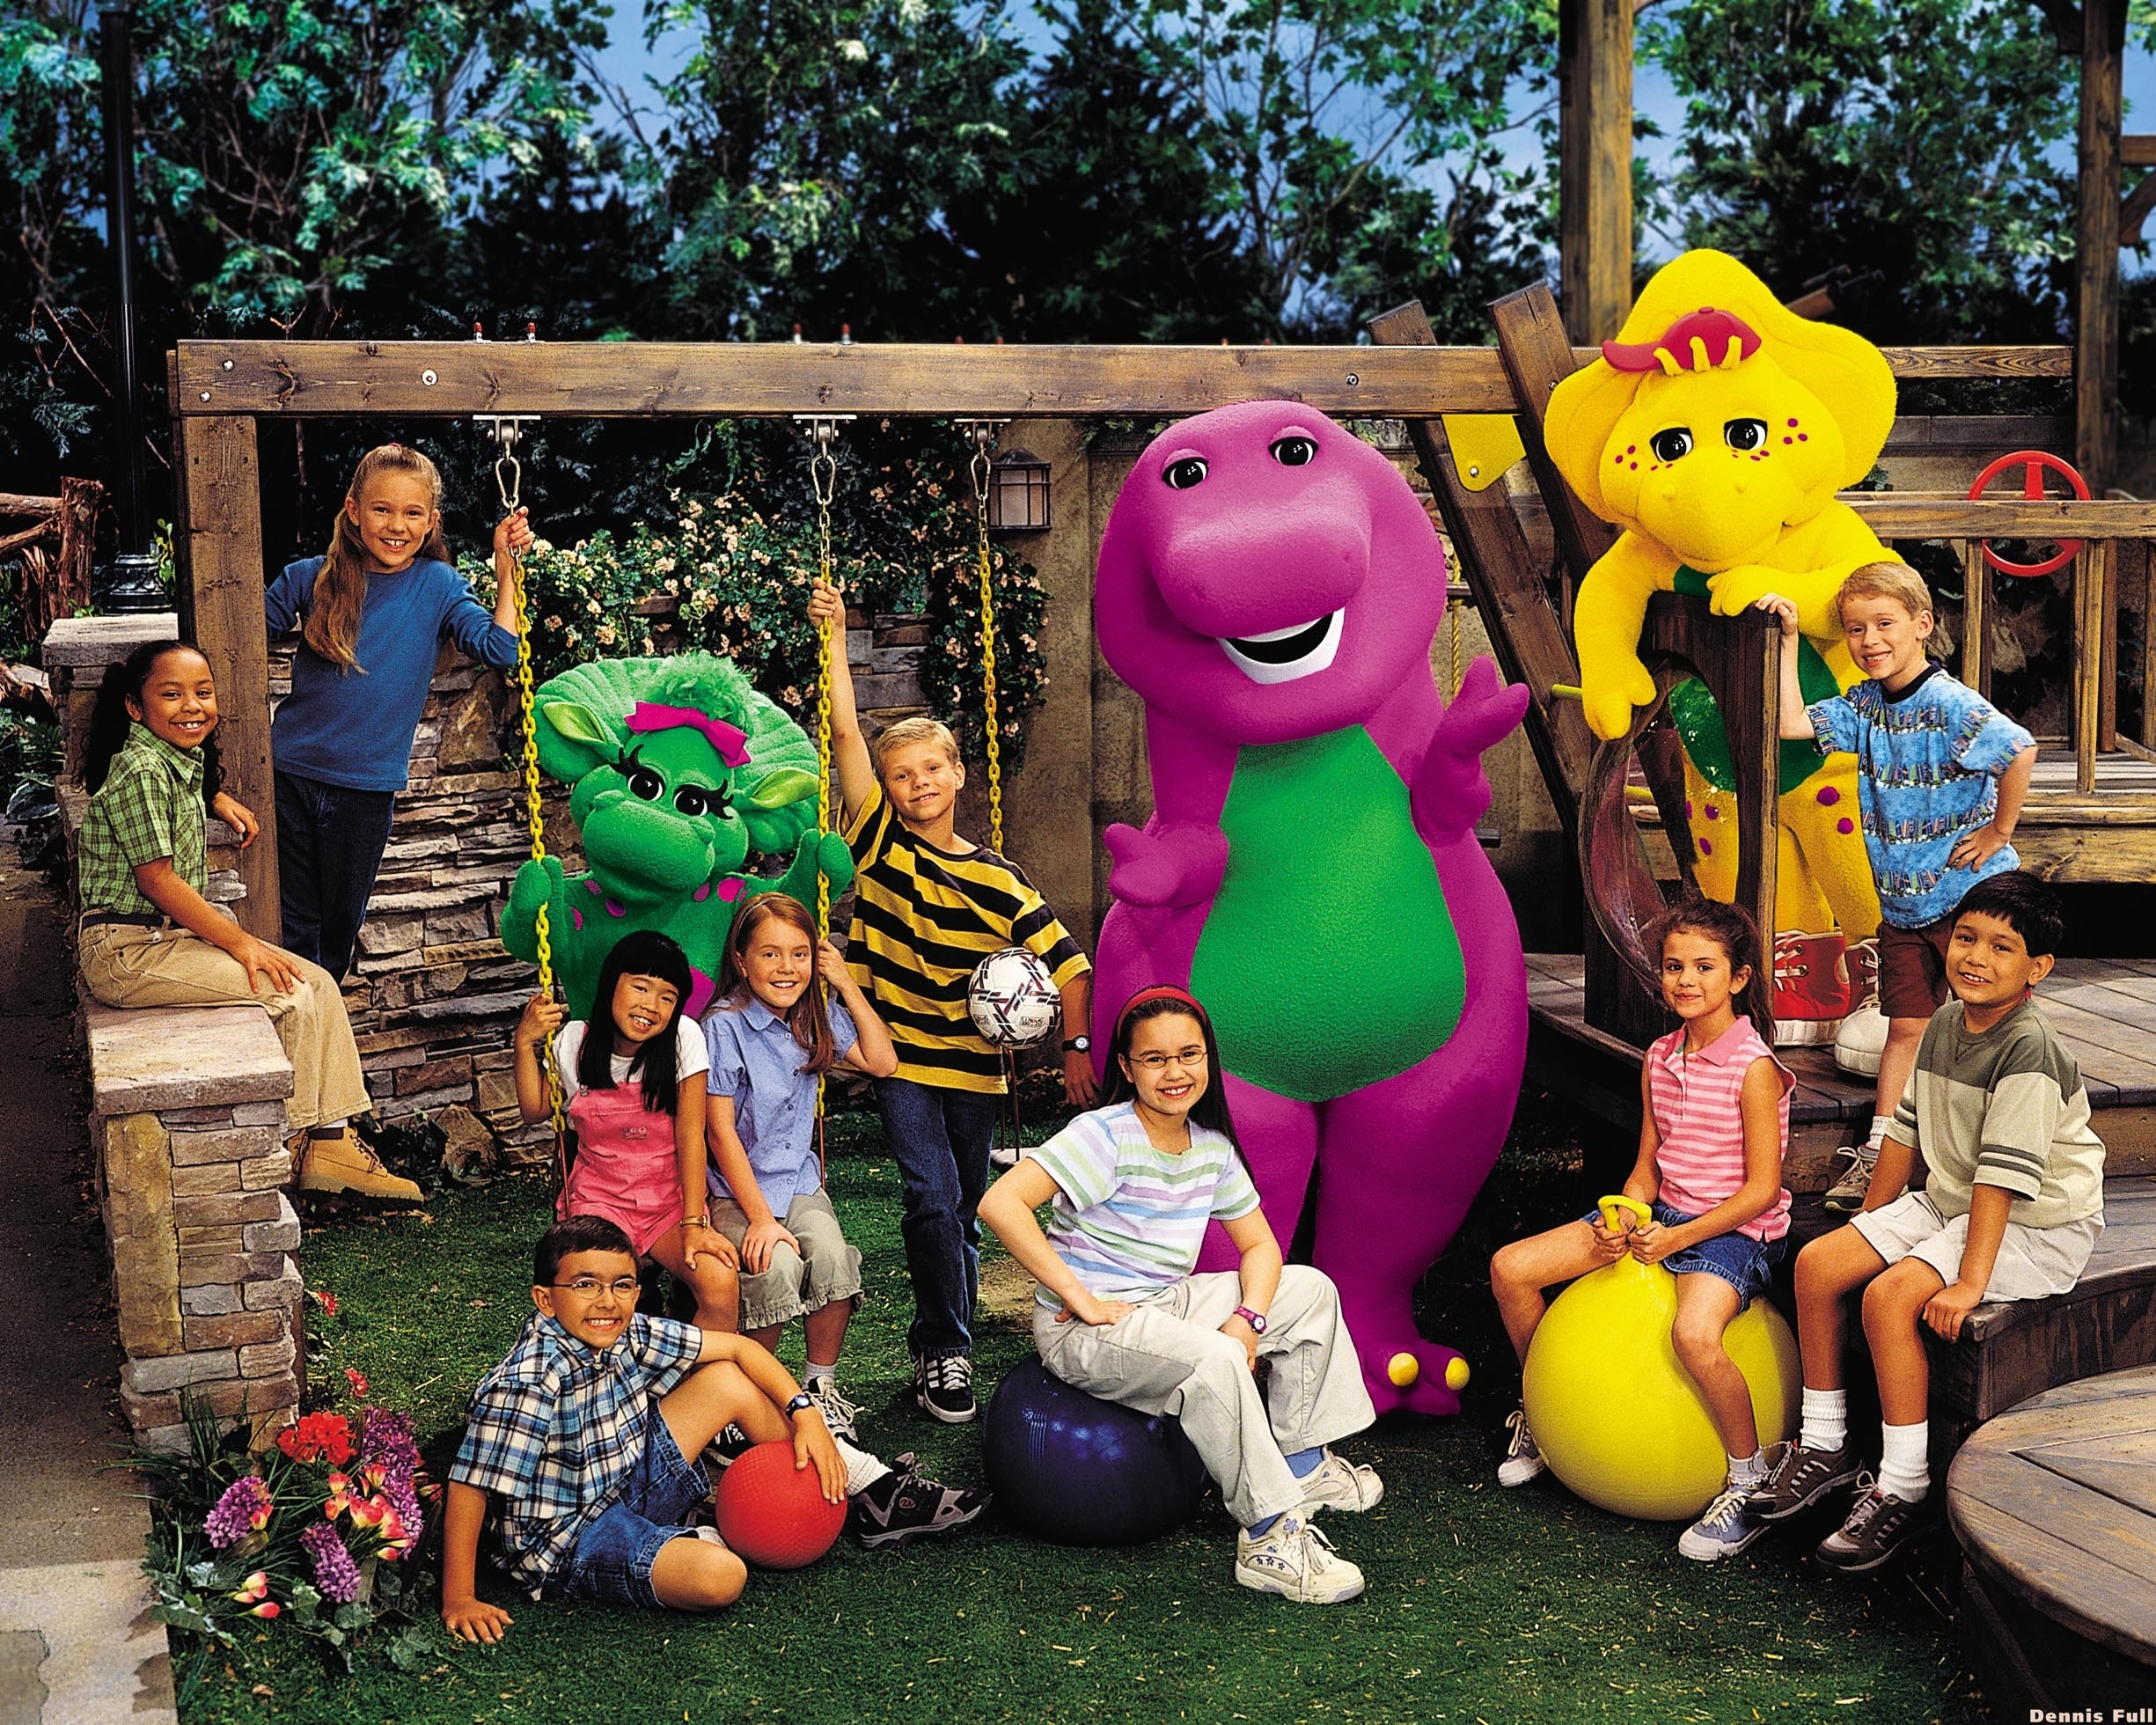 Barney & friends play ball